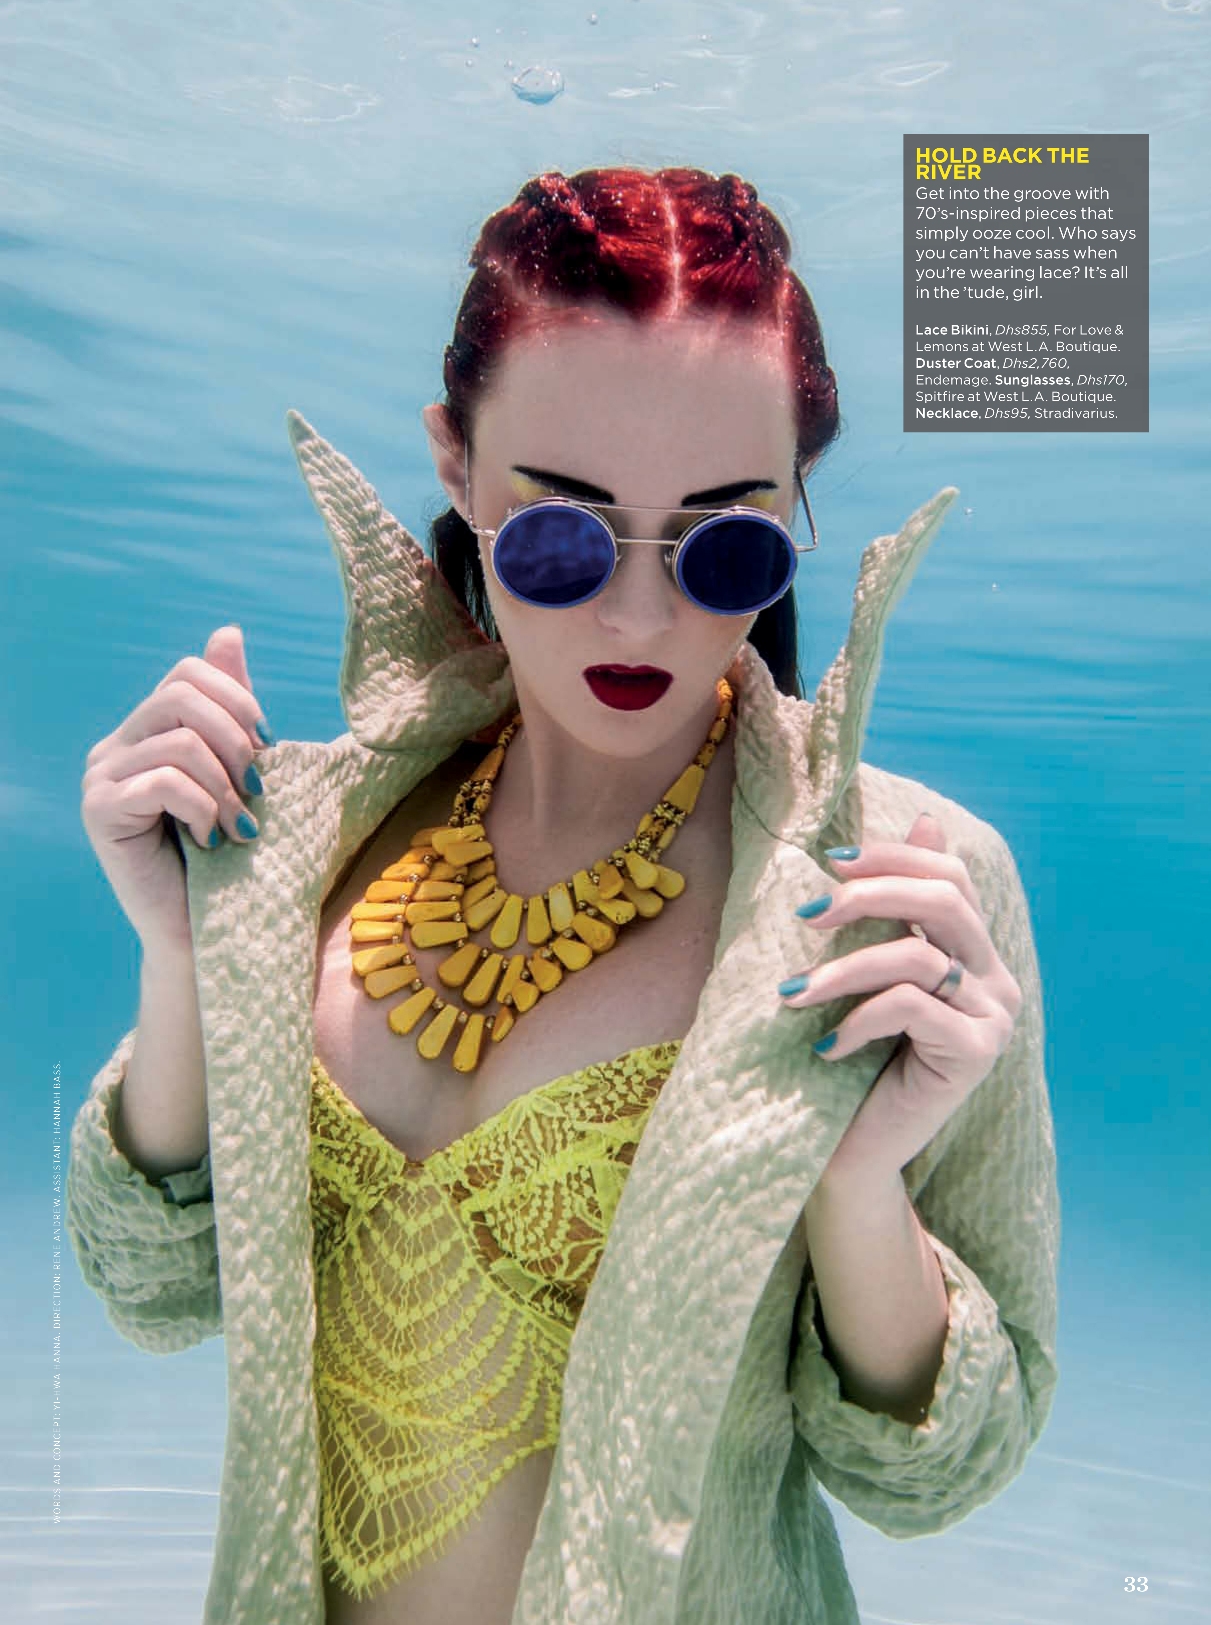 FLC Models & Talents - Print Campaigns - Women's Health Magazine - Underwater